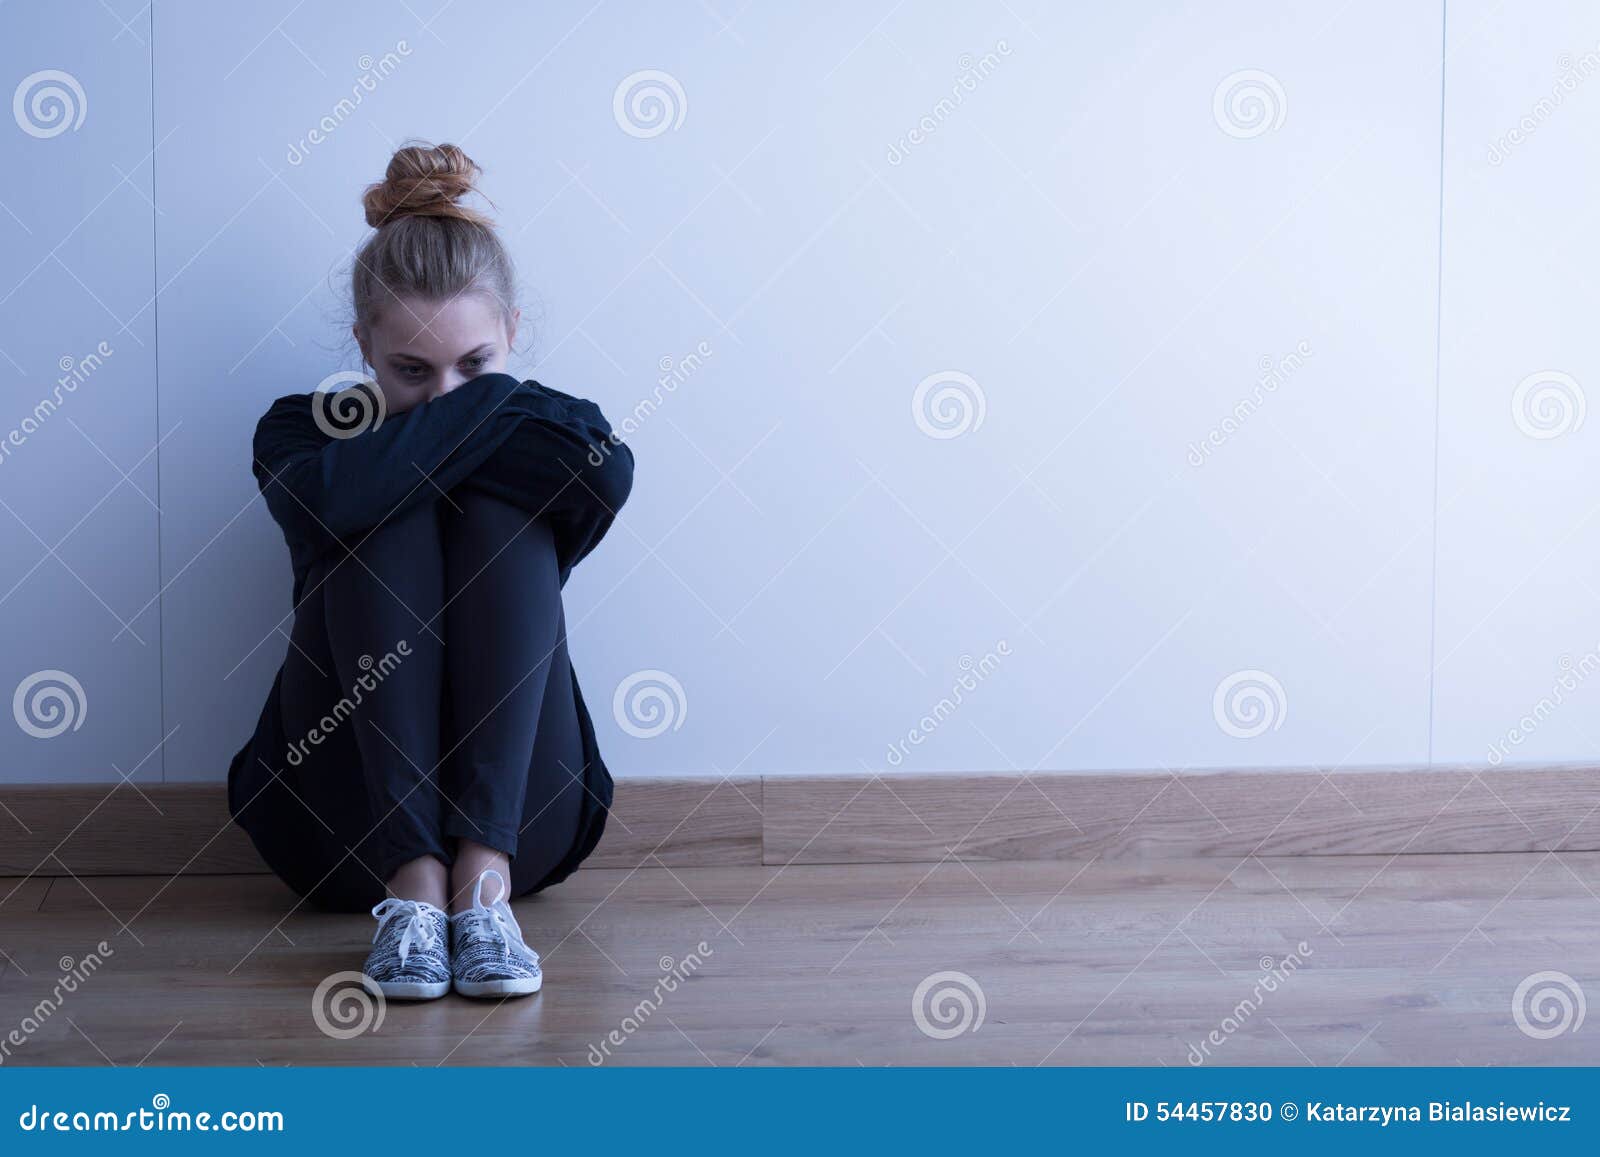 sad woman with depression